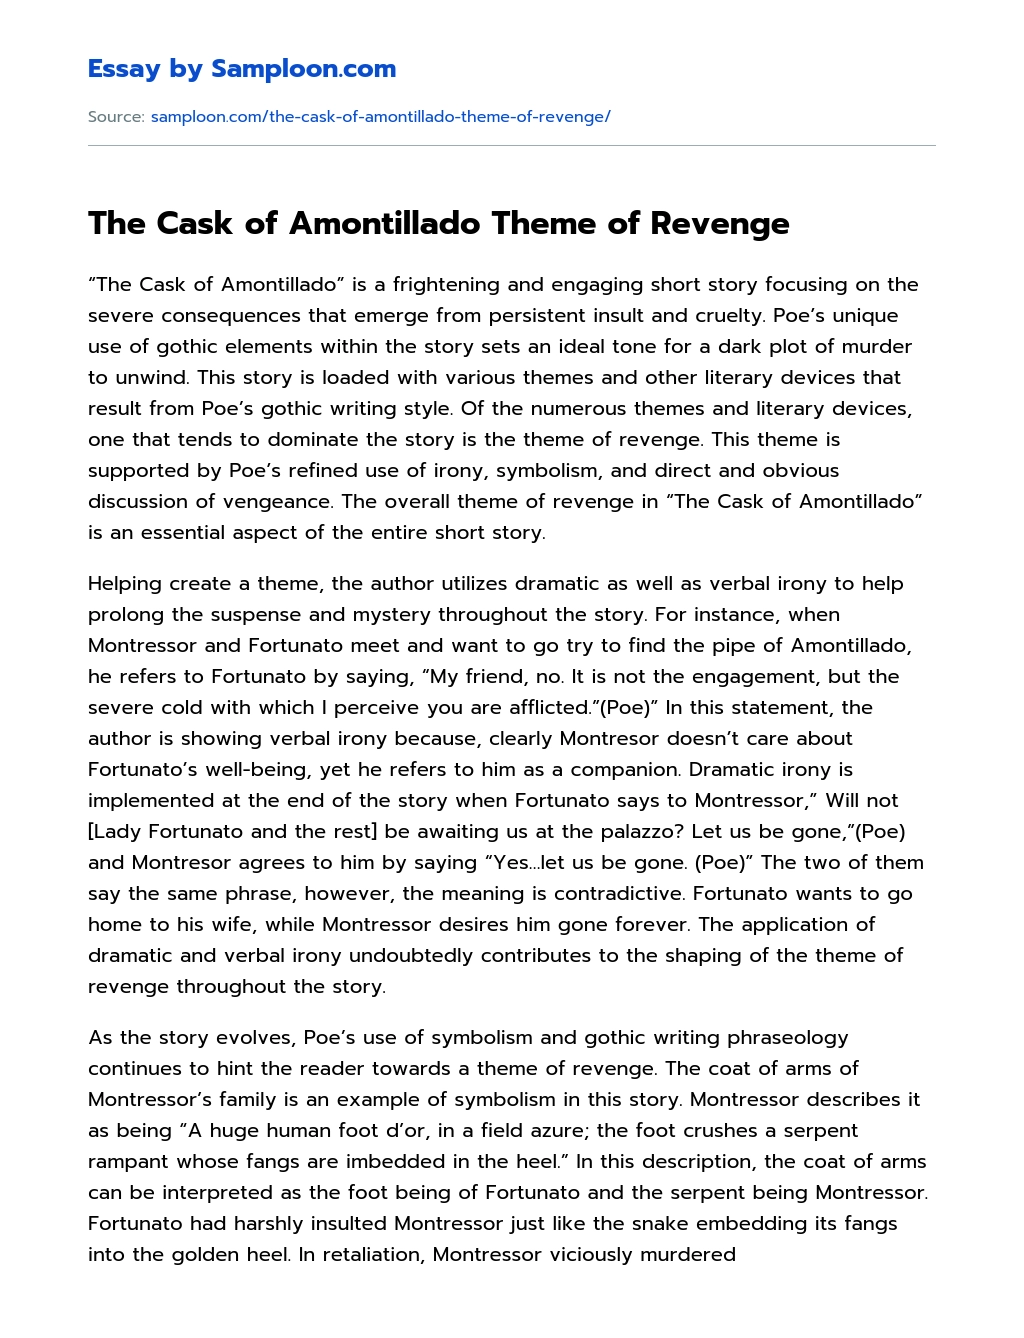 The Cask of Amontillado Theme of Revenge essay